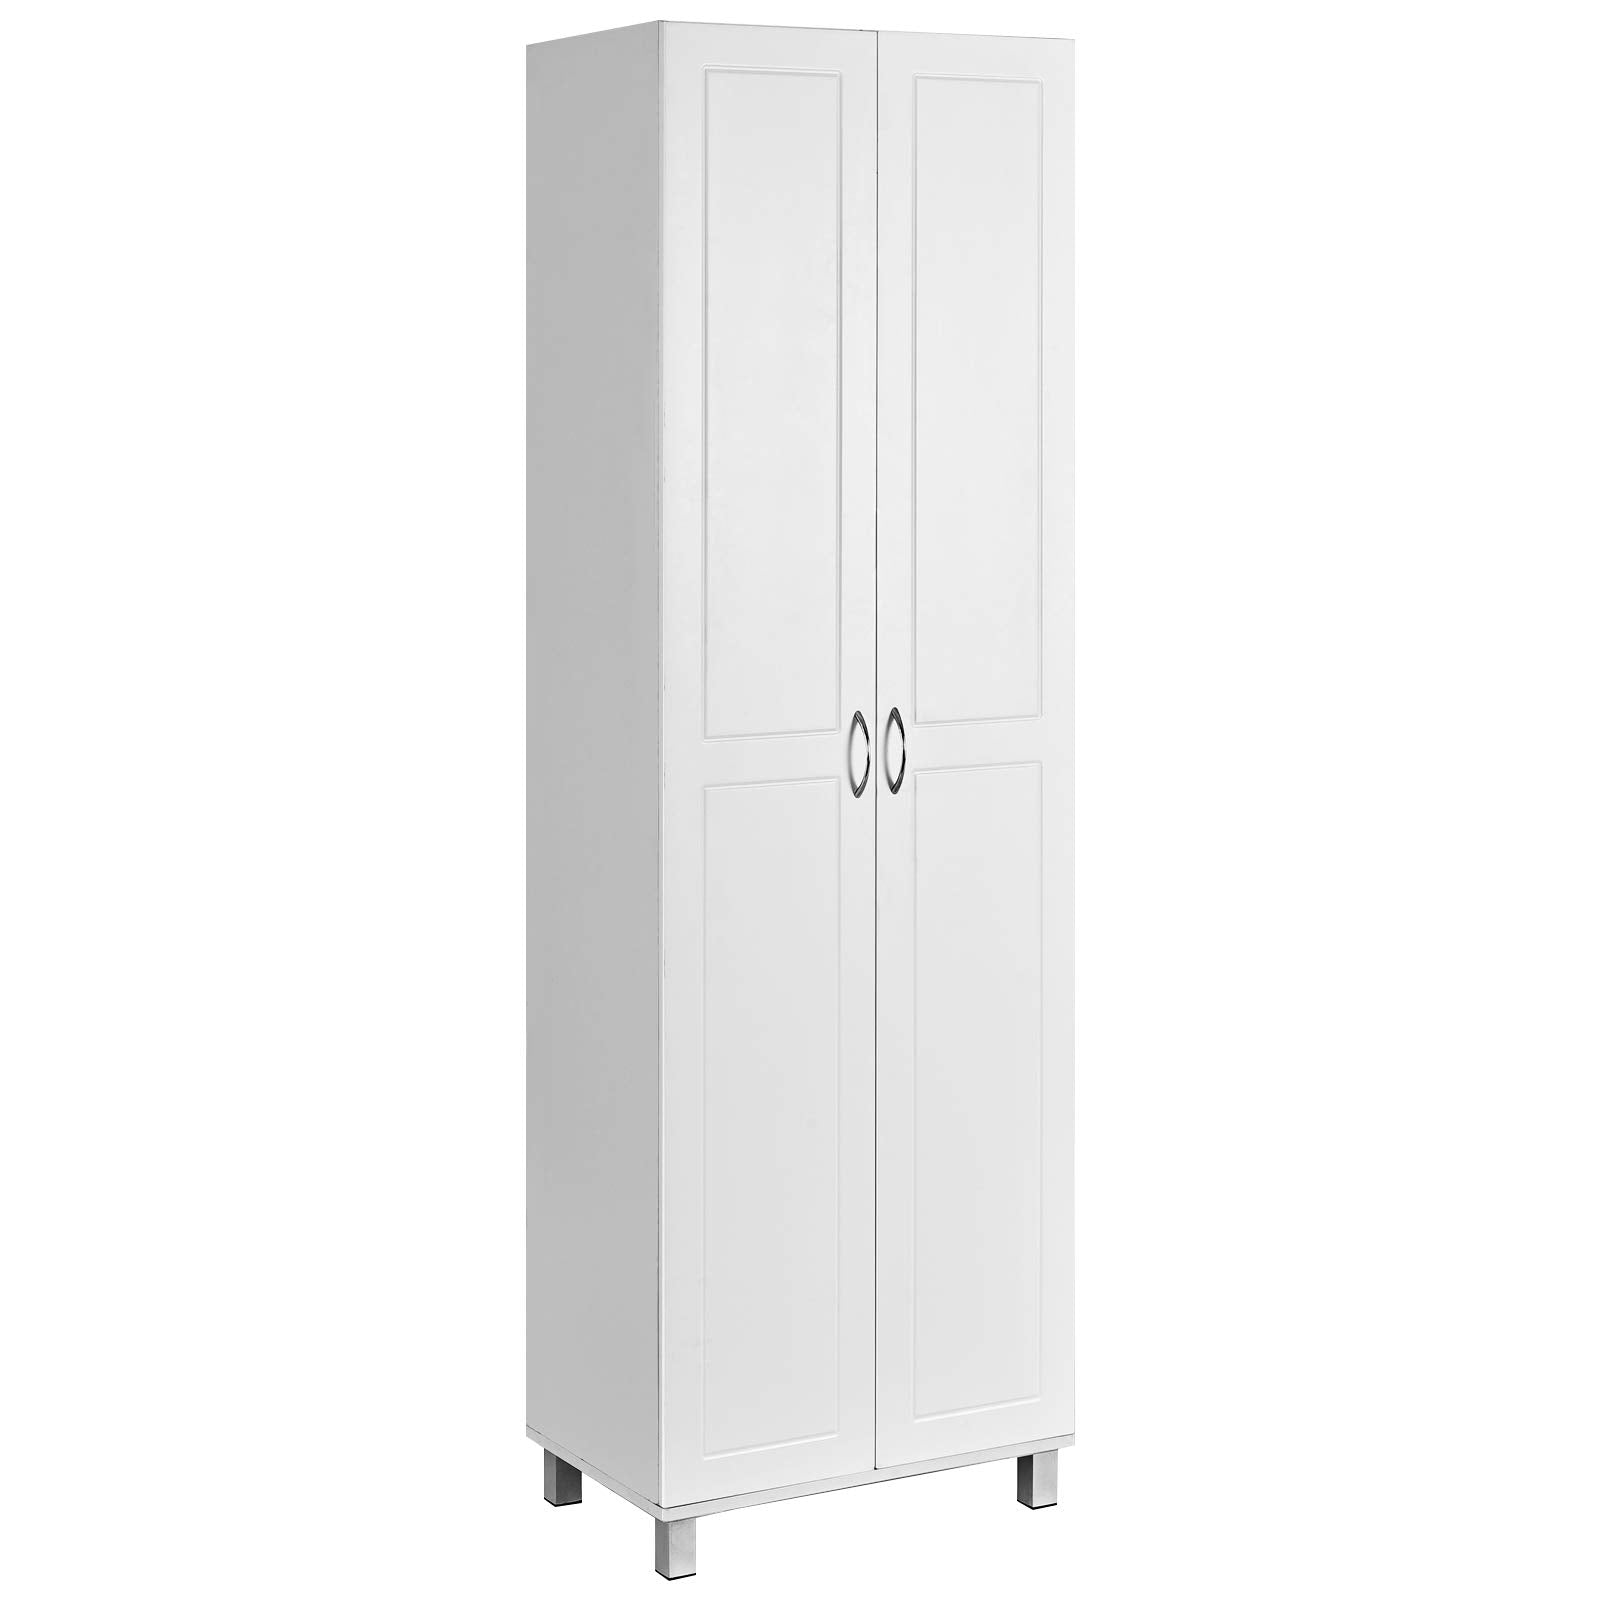 Giantex Kitchen Pantry Cabinet, 2 Door Cupboard with 5 Shelves, Storage Organizer for Kitchenware